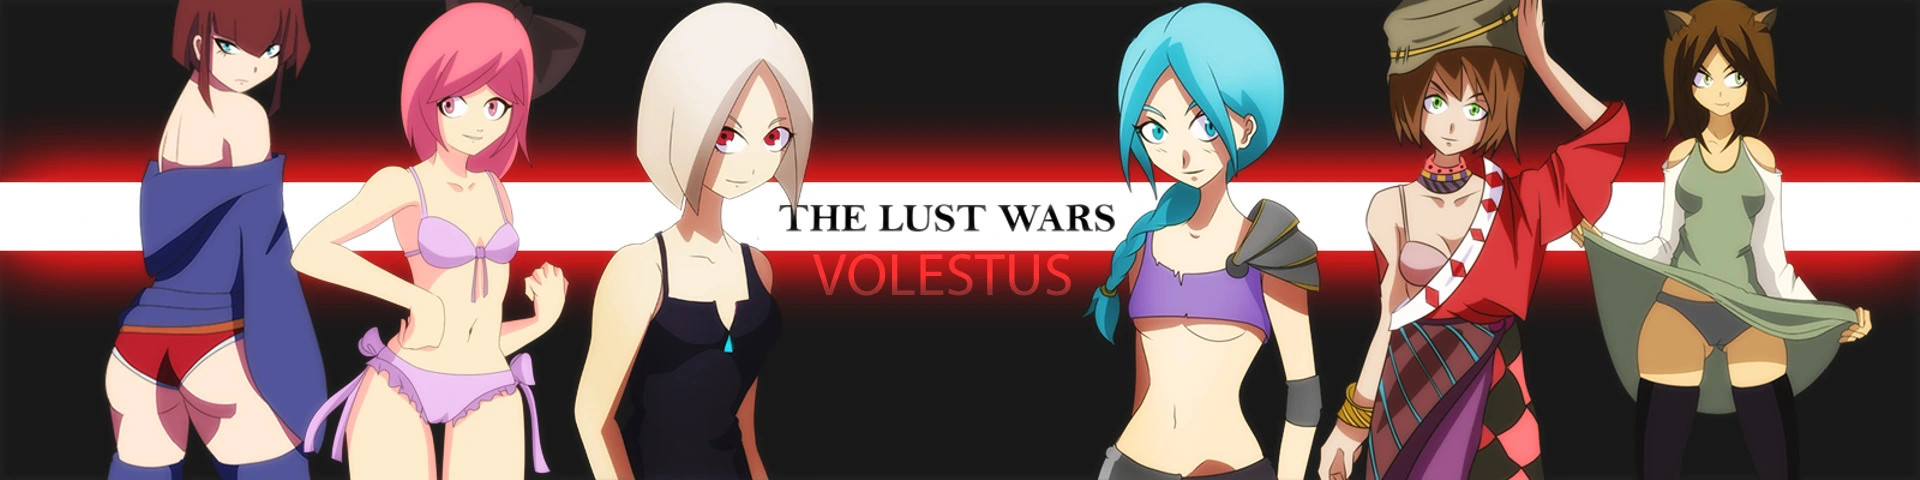 The Lust Wars: Volestus main image